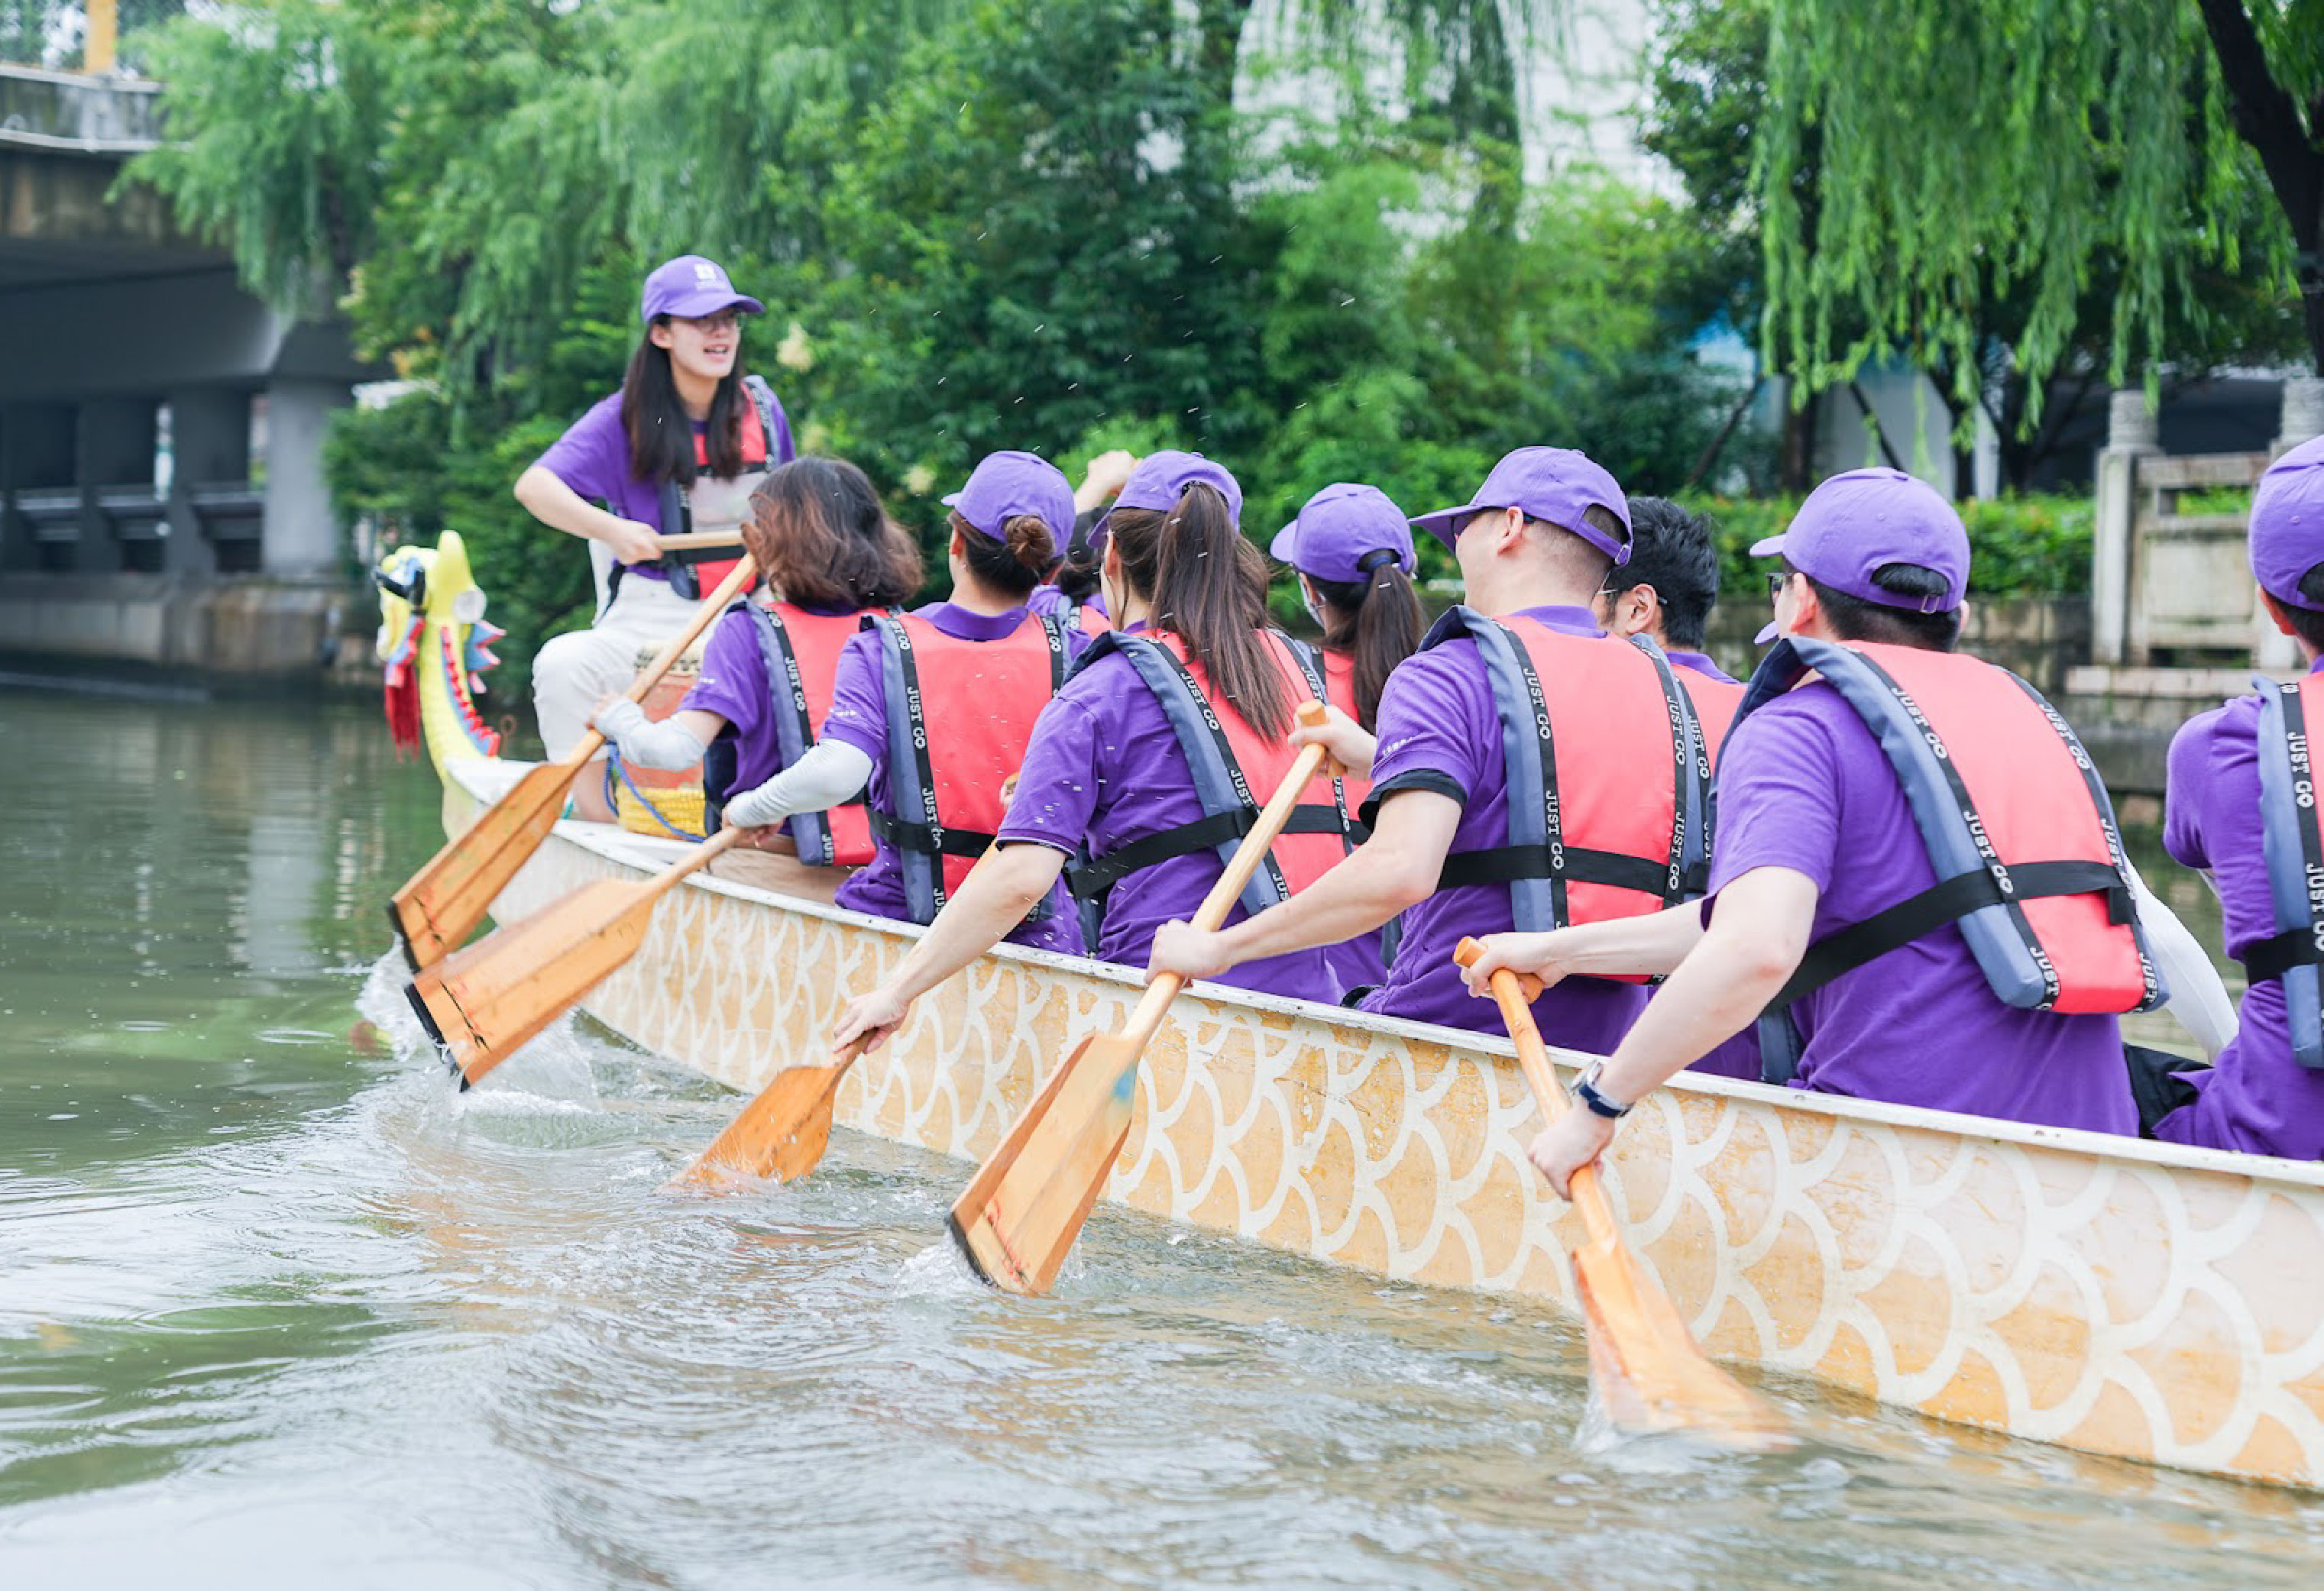 dragon boat rowing takes teamwork